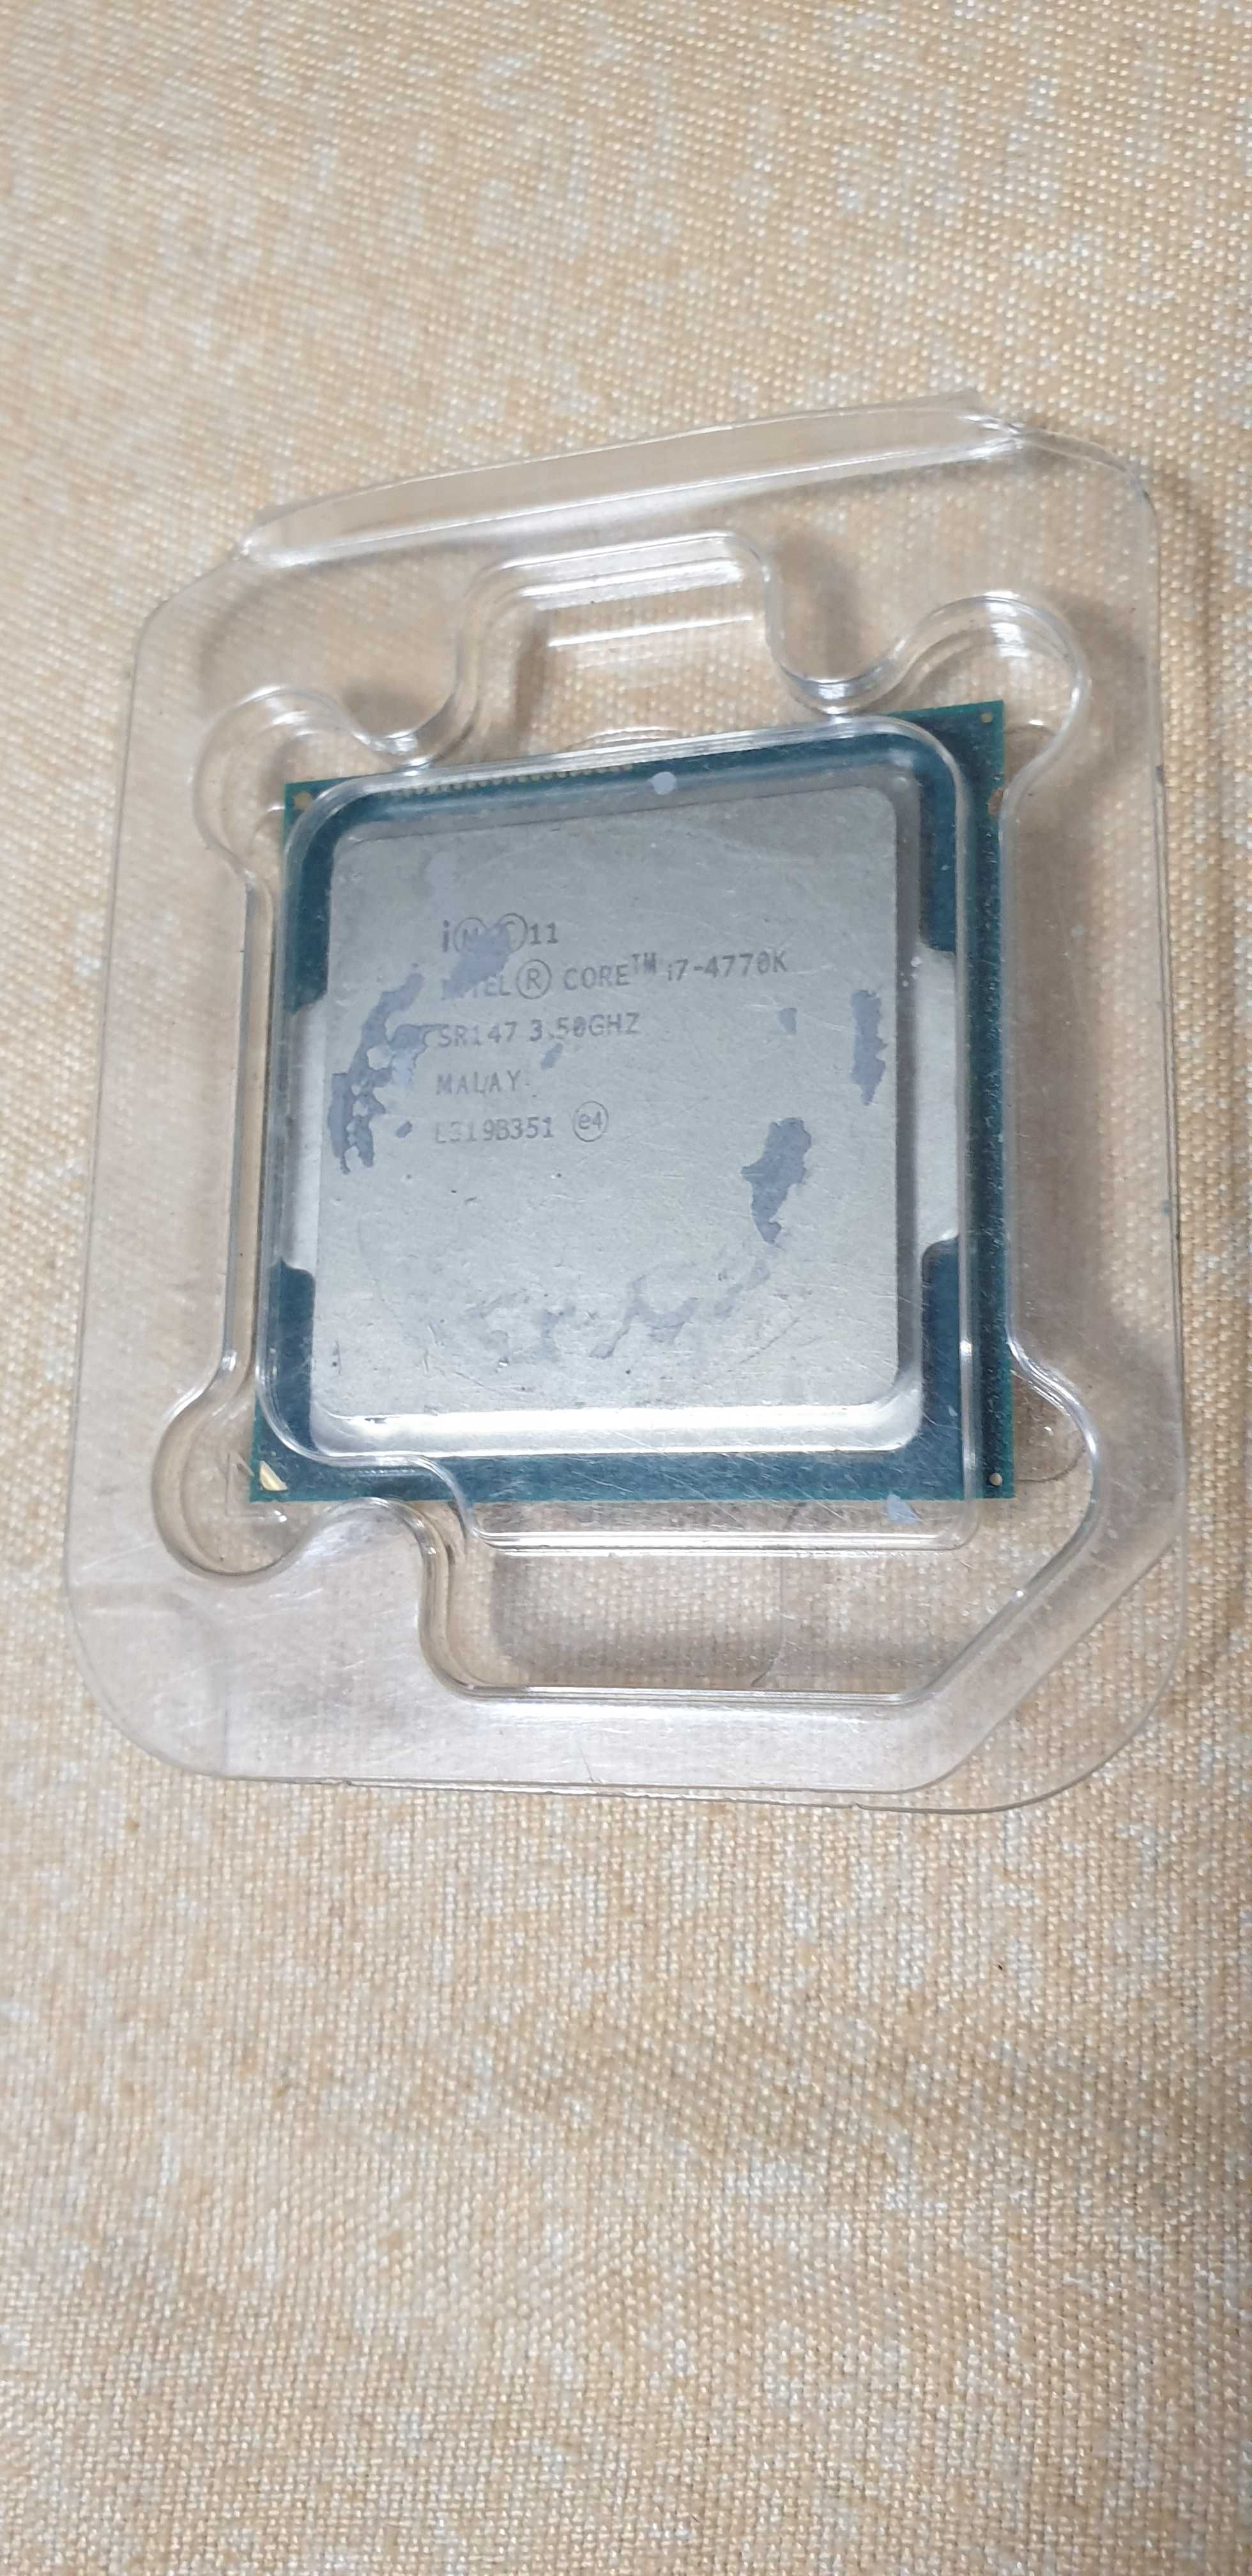 Procesor Intel Haswell, Core i7 4770K 3.5GHz soket 1150